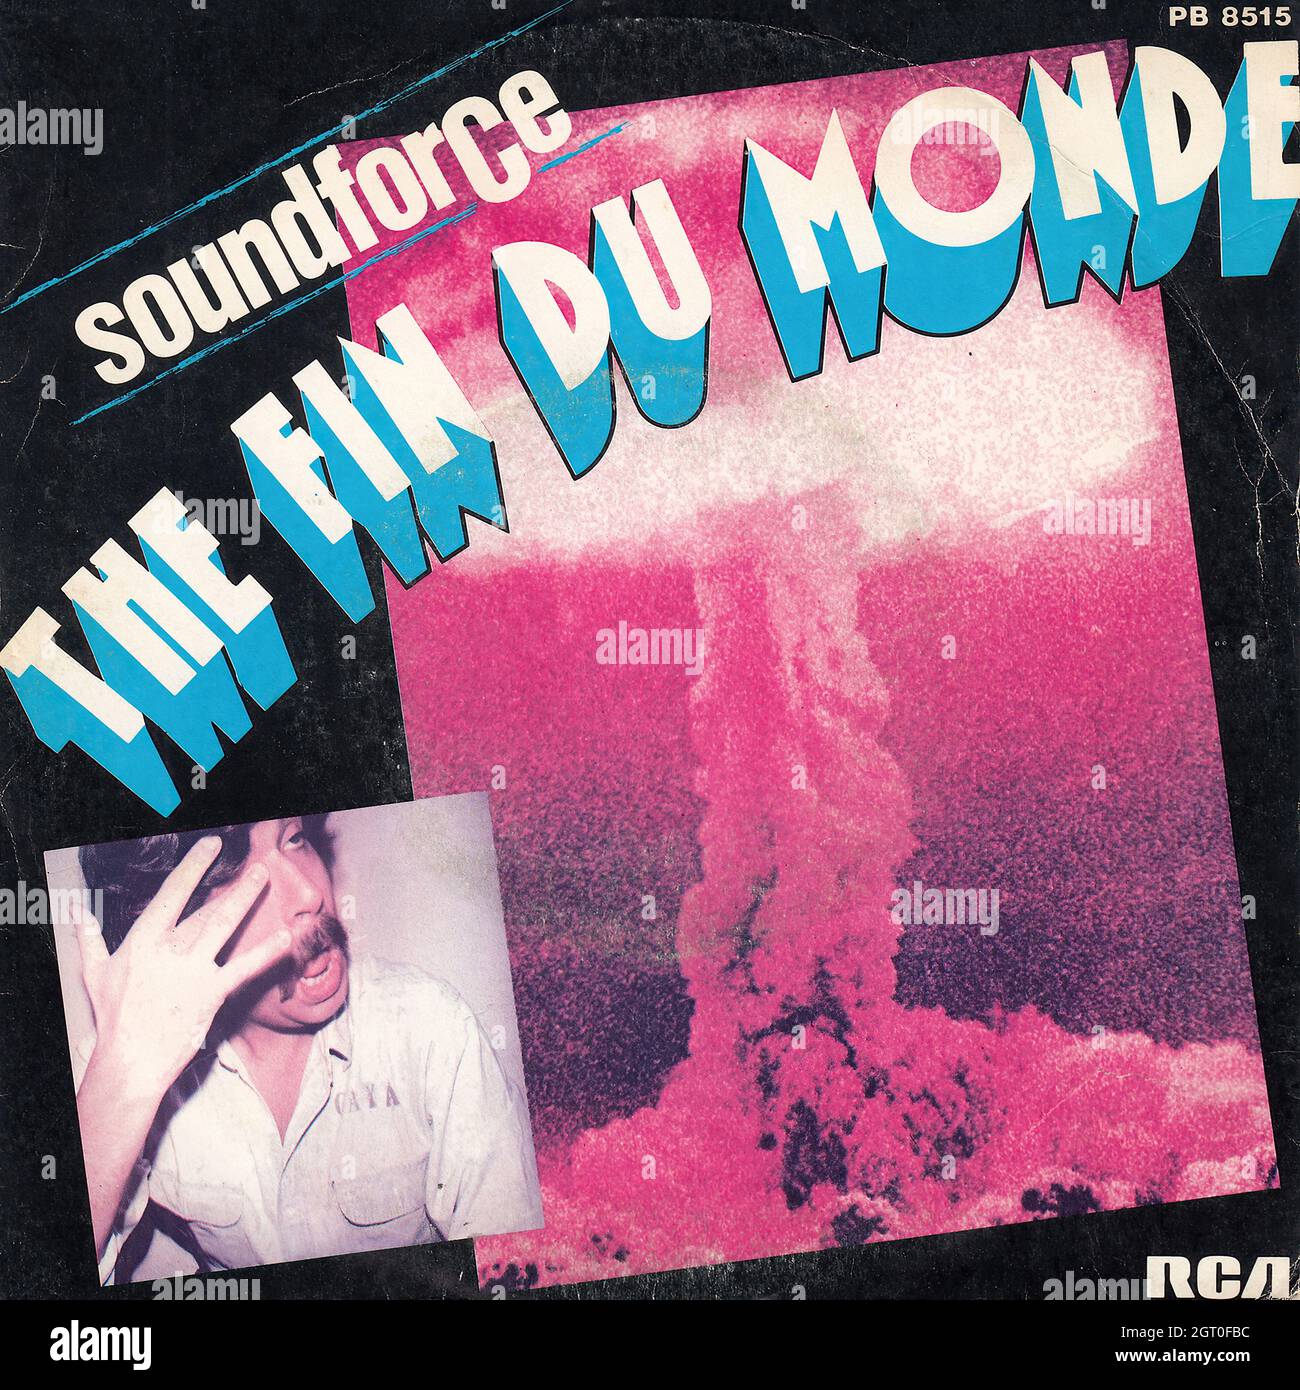 Soundforce - The fin du monde - Viva la dolce vita 45rpm - Vintage Vinyl Record Cover Stock Photo